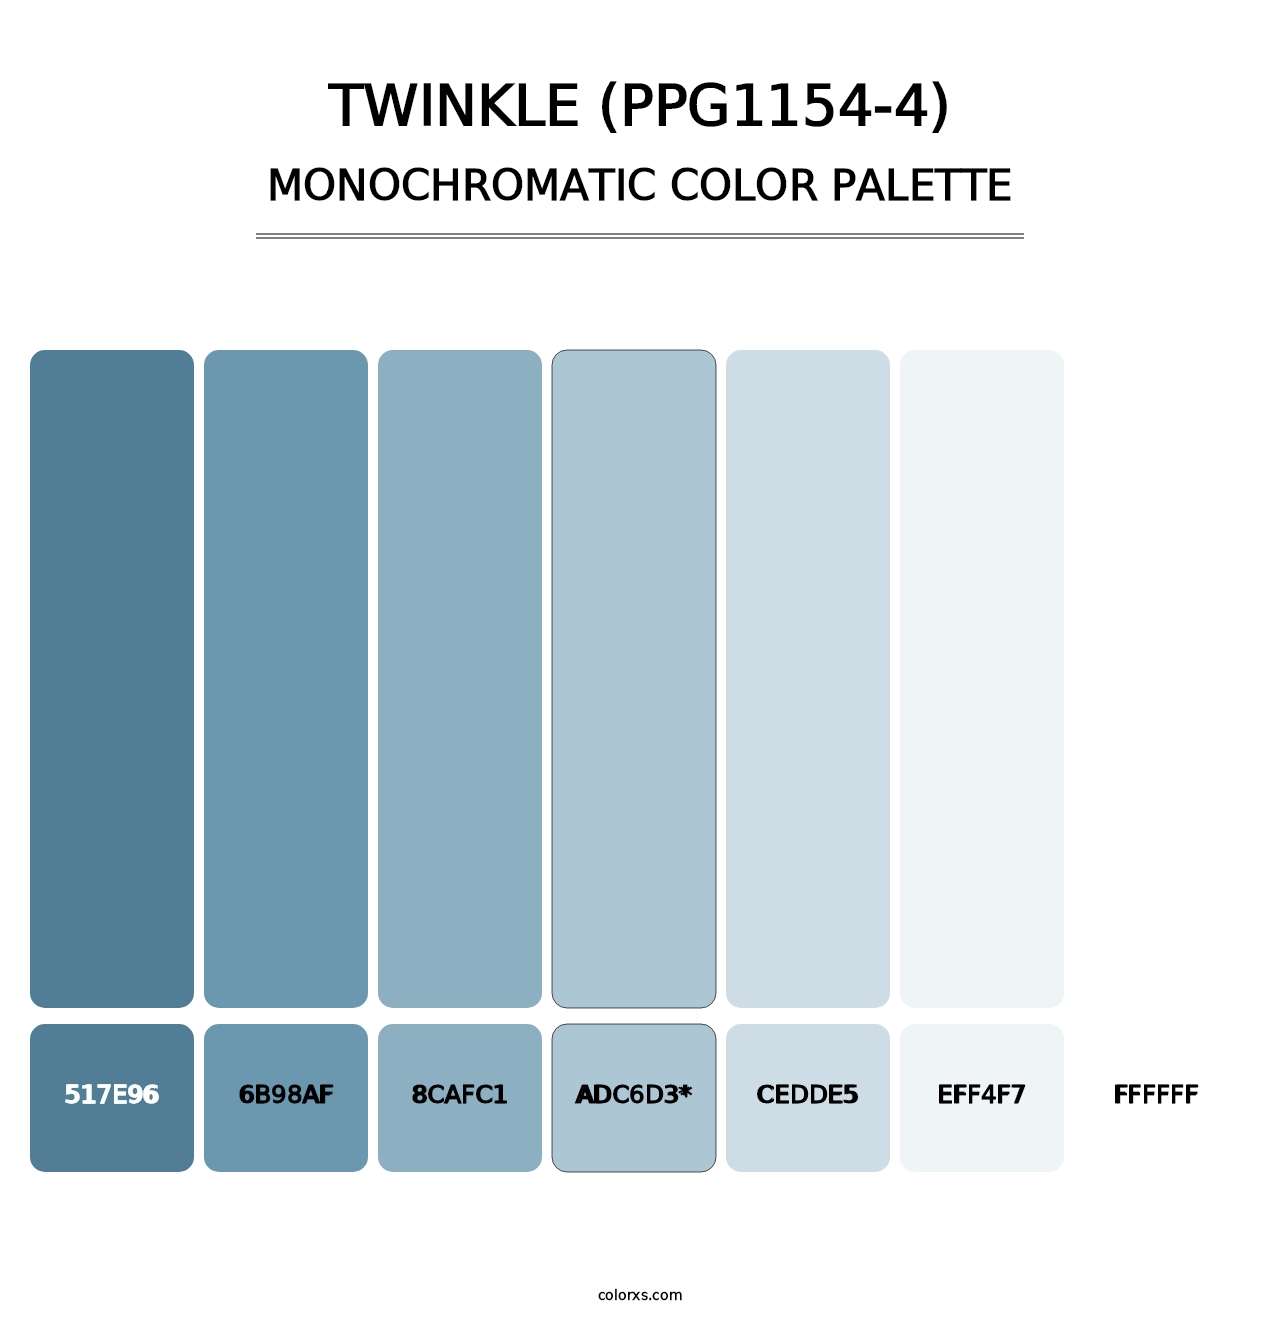 Twinkle (PPG1154-4) - Monochromatic Color Palette